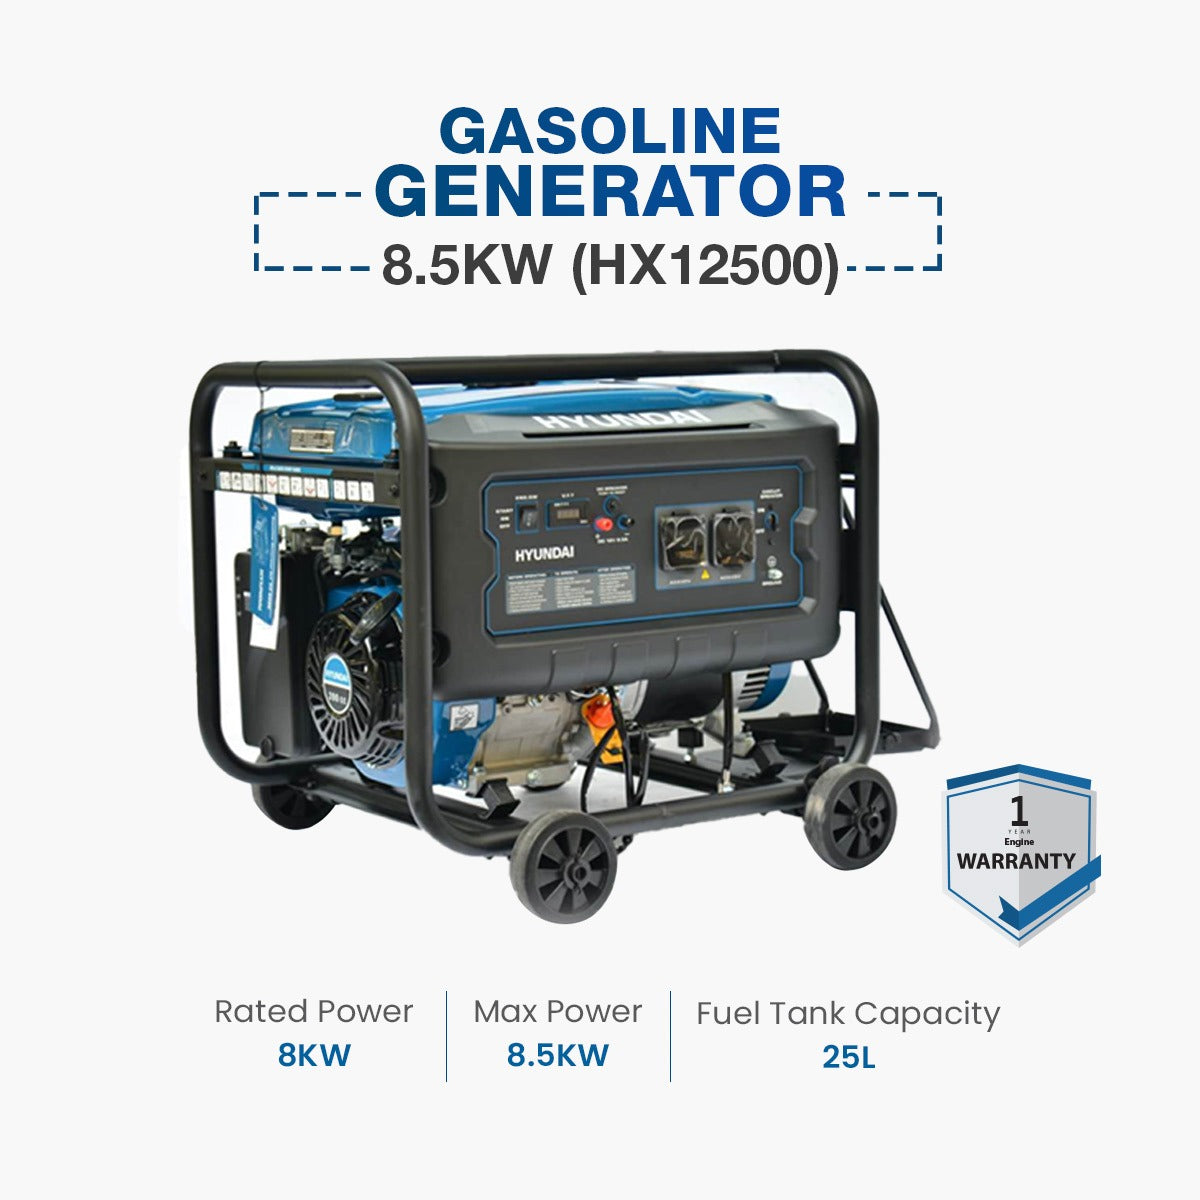 Hyundai Gasoline Generator 8.5KW (HX12500) 1 Year Brand Warranty